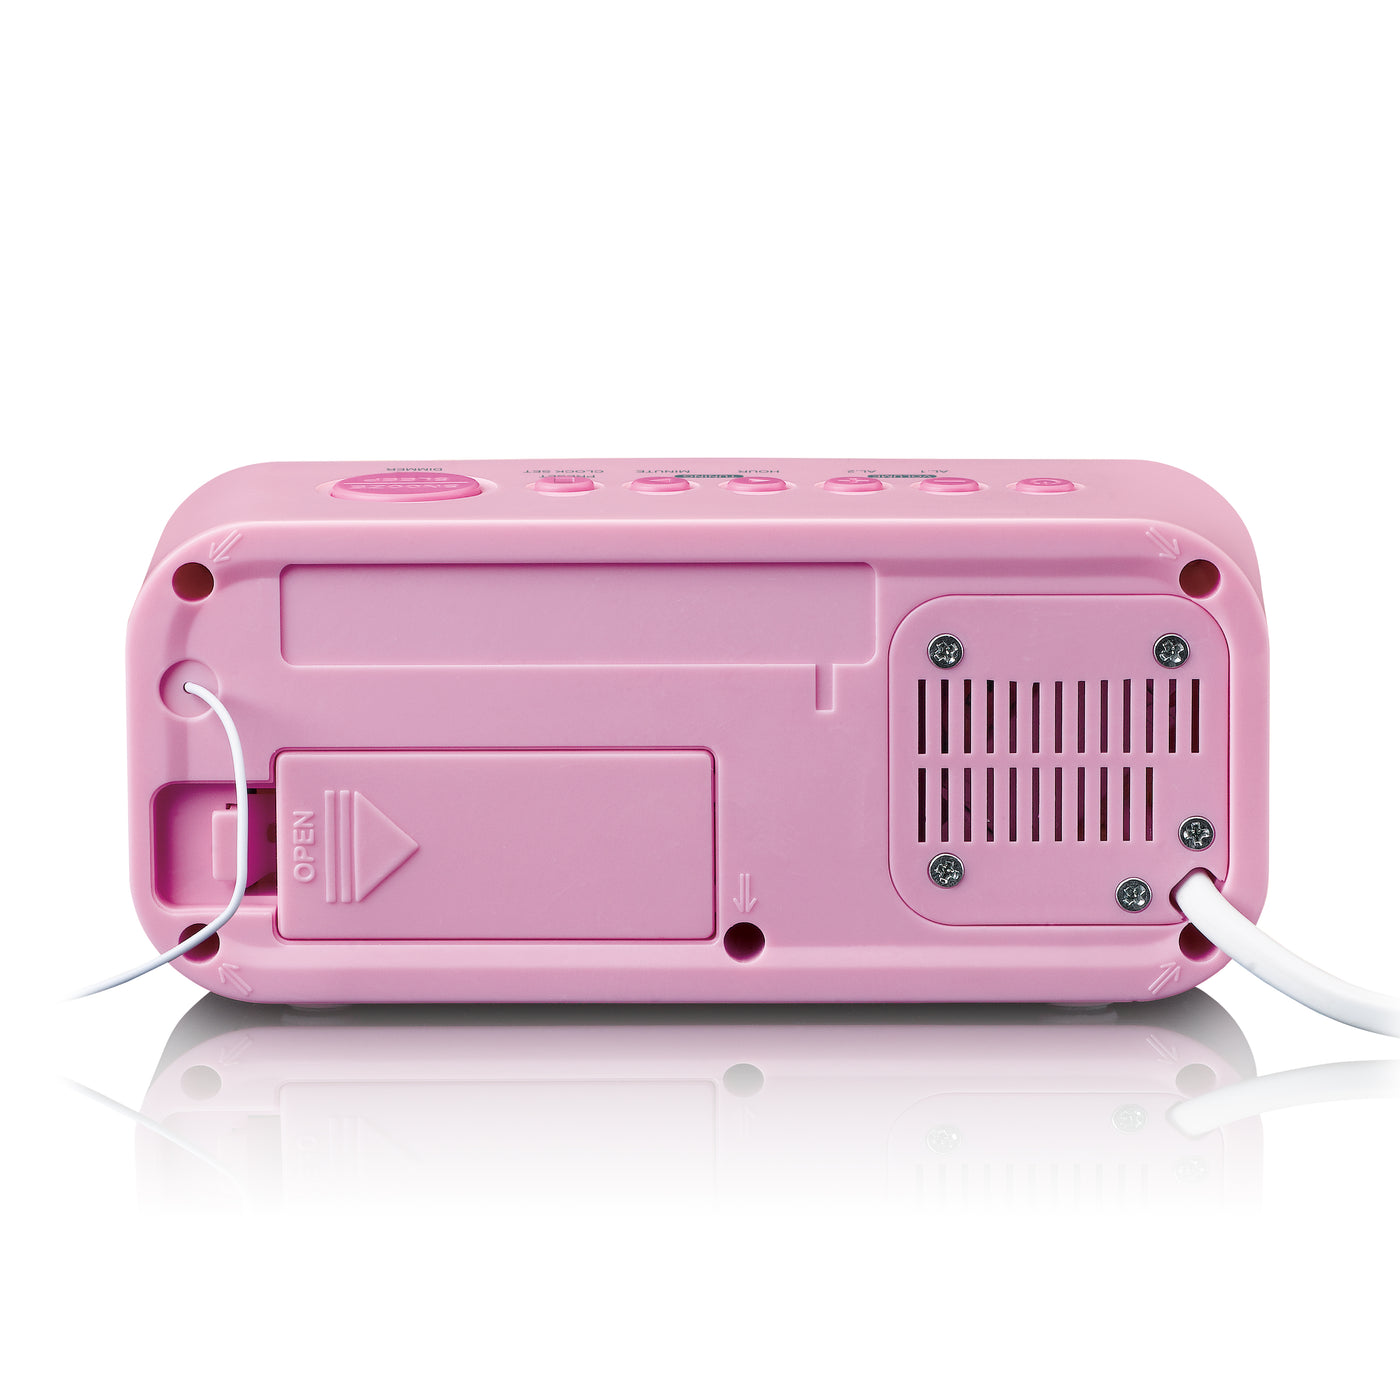 LENCO CR-205PK - Alarm clock radio with sticker set - Pink